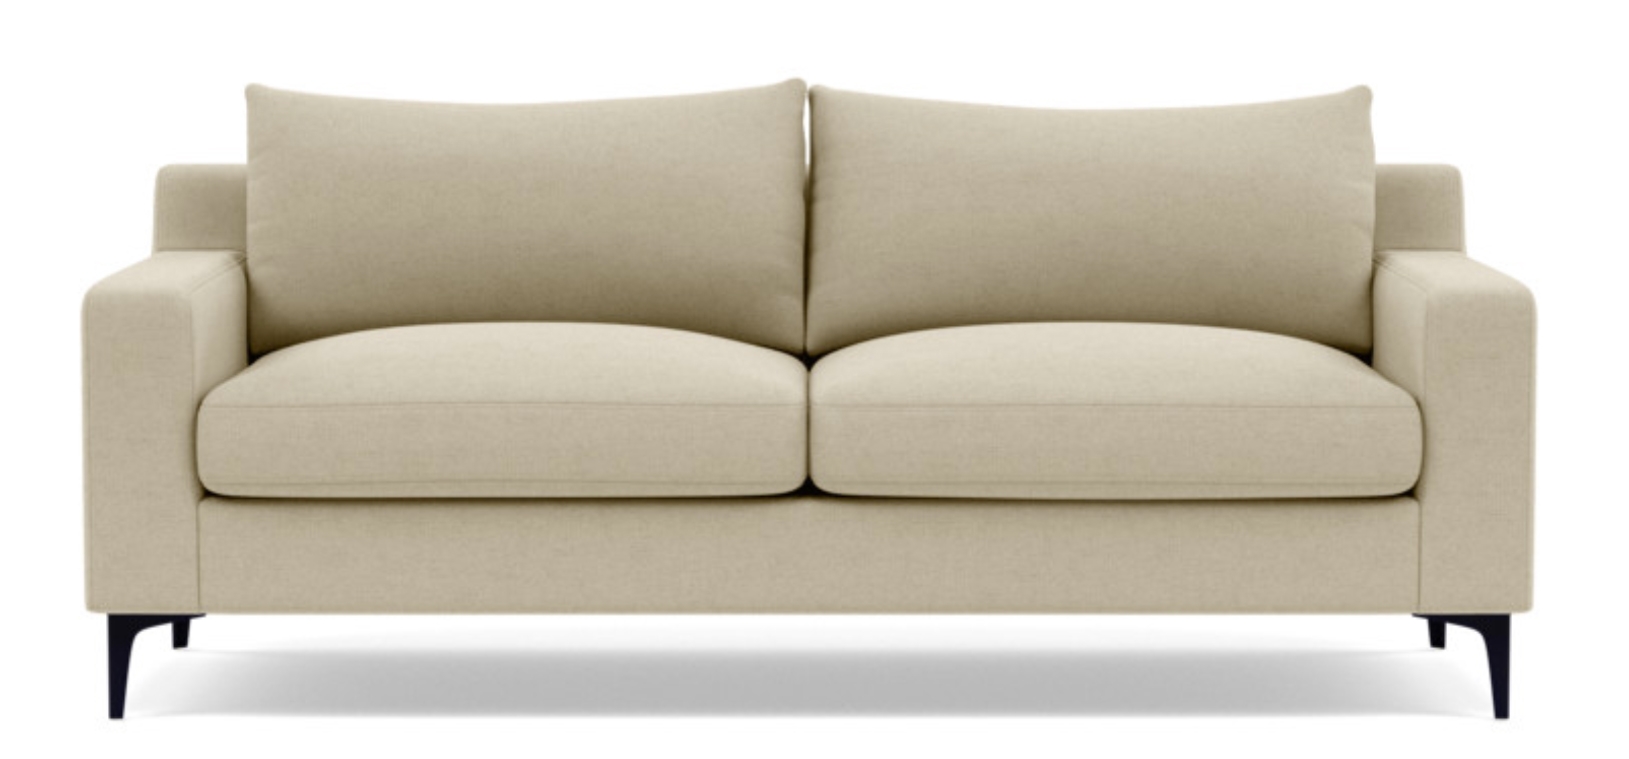 SLOAN Fabric 2-Seat Sofa - Oatmeal, Heathered Weave - Image 0